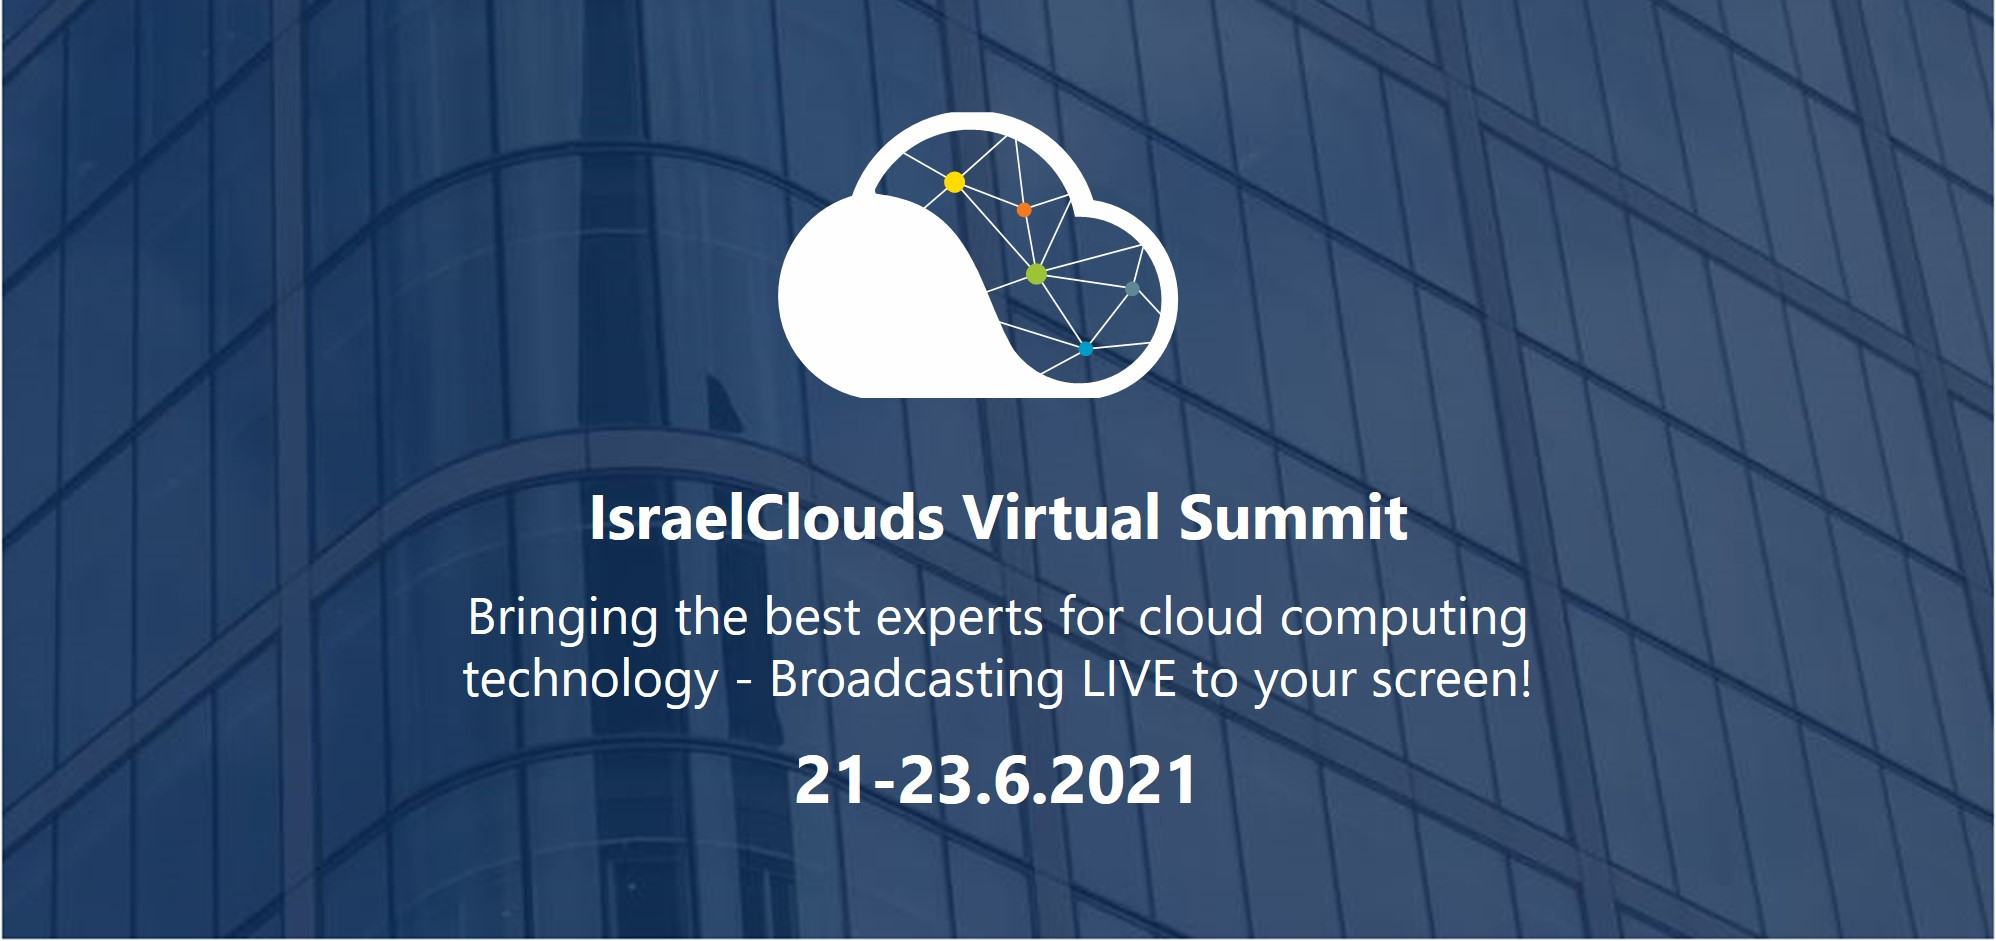 IsraelClouds Virtual Summit